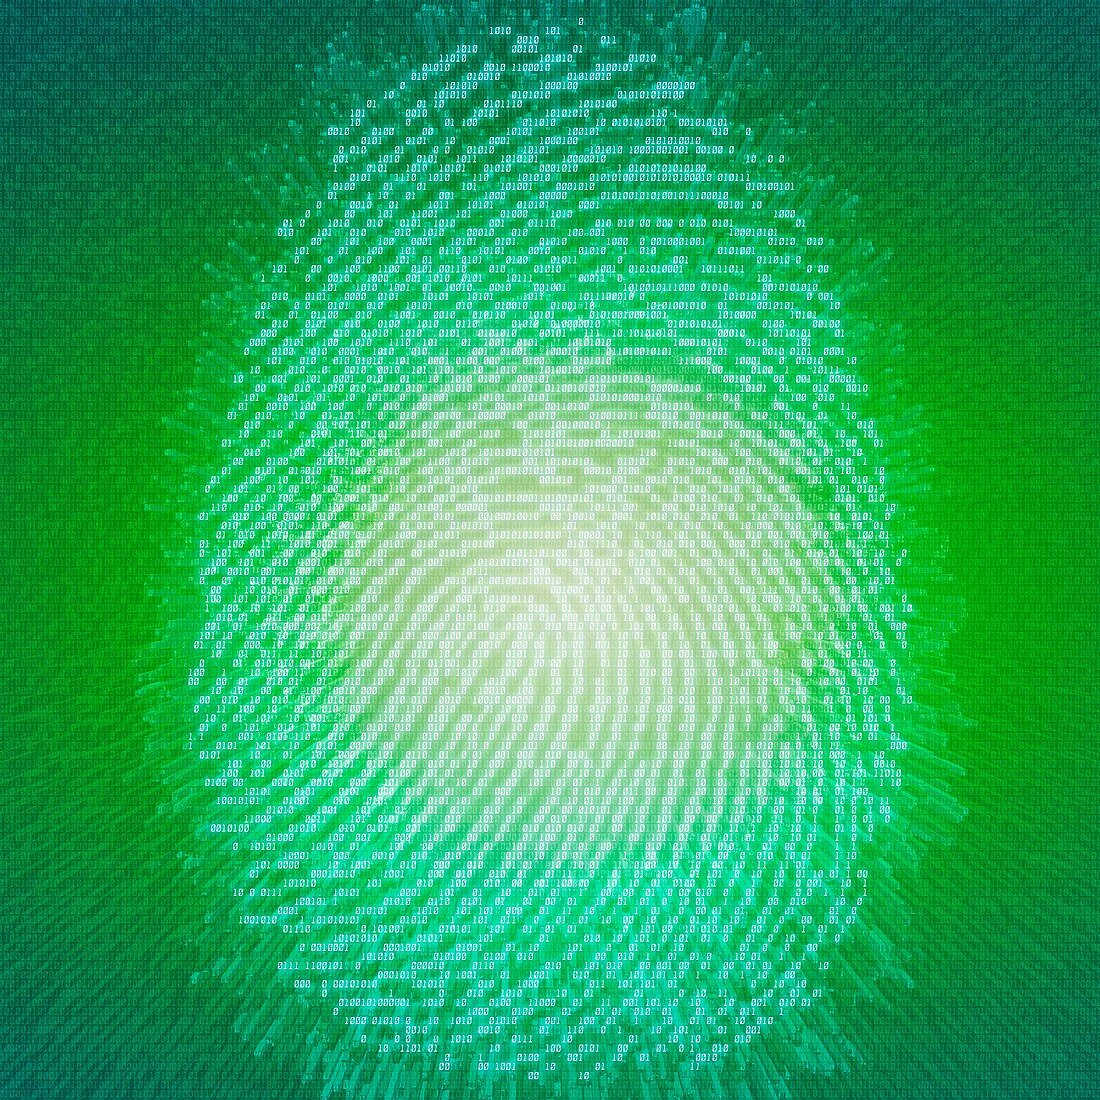 Digital fingerprint, illustration